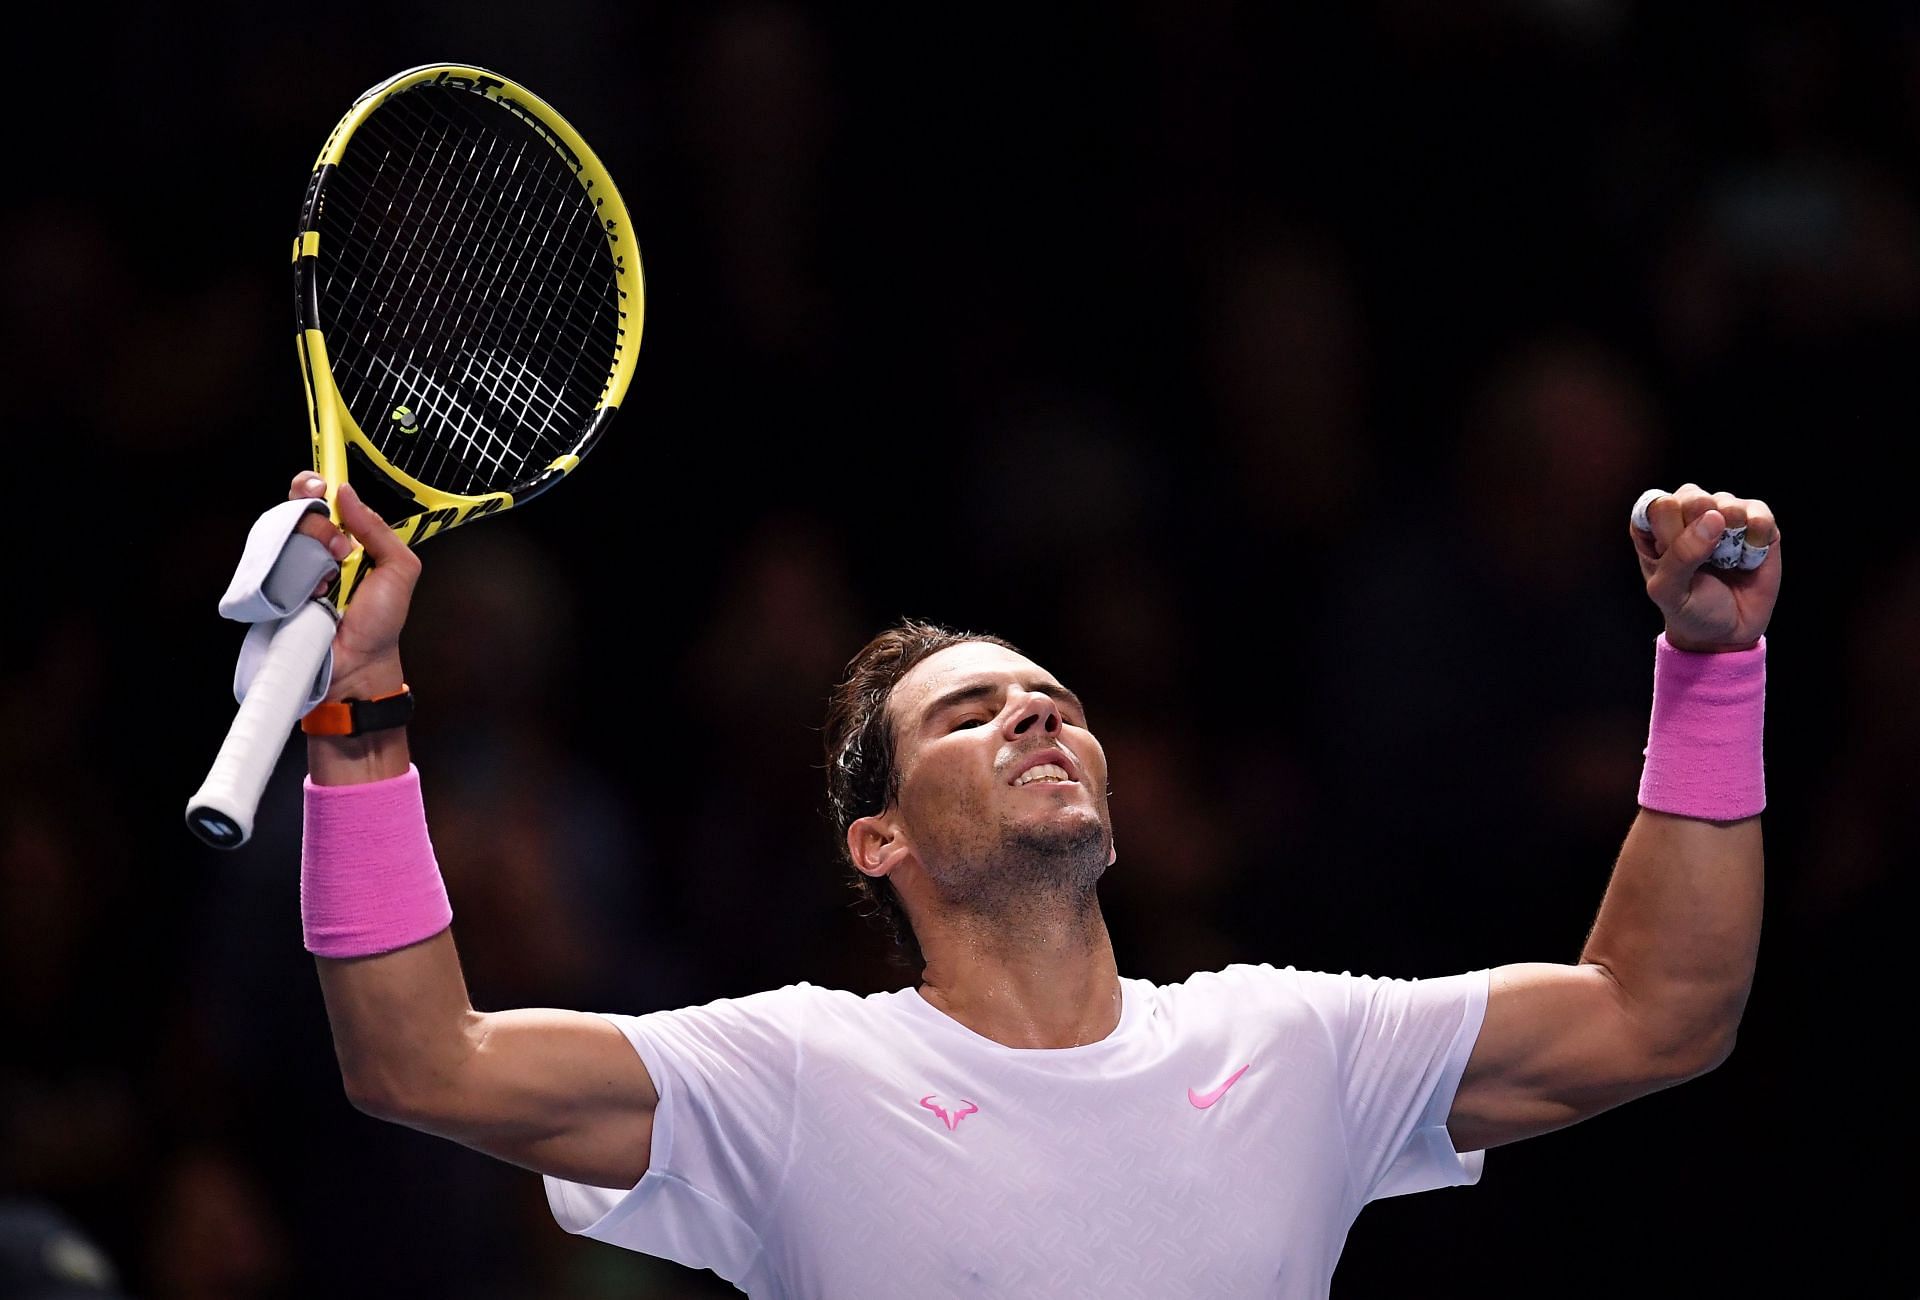 Nadal won a three-set thriller in London